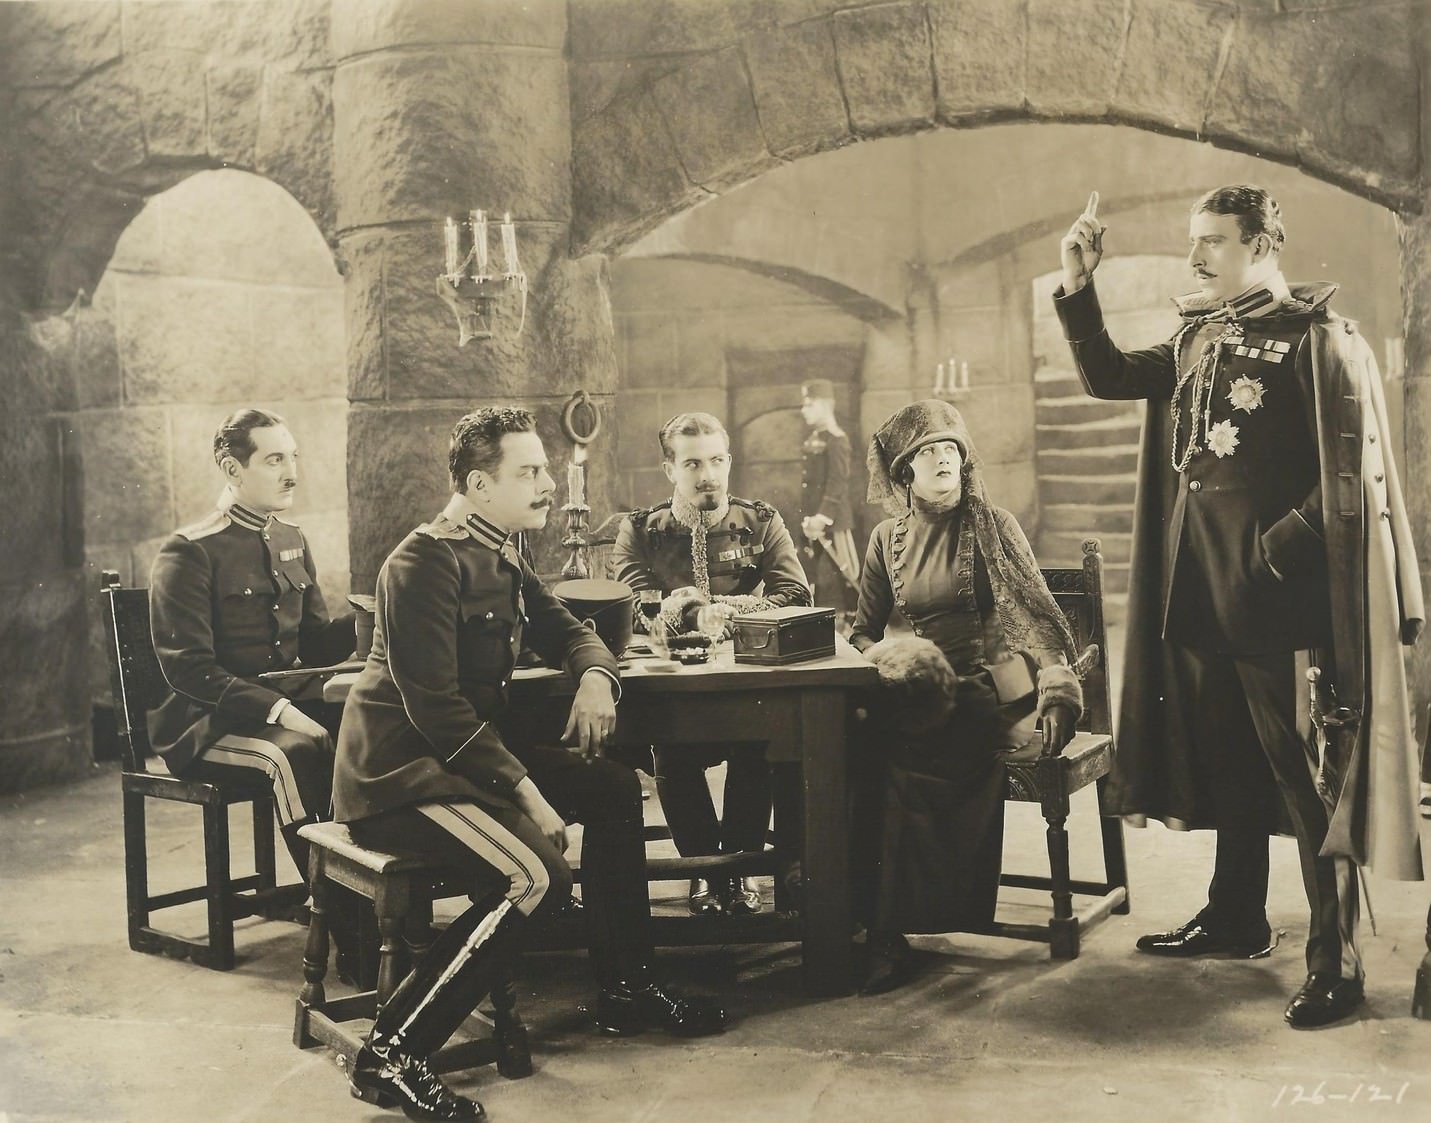 Barbara La Marr in "The Prisoner of Zenda", 1922 with Stuart Holmes (standing) as Black Michael, and Ramon Novarro (seated, center) as Rupert of Hentzau